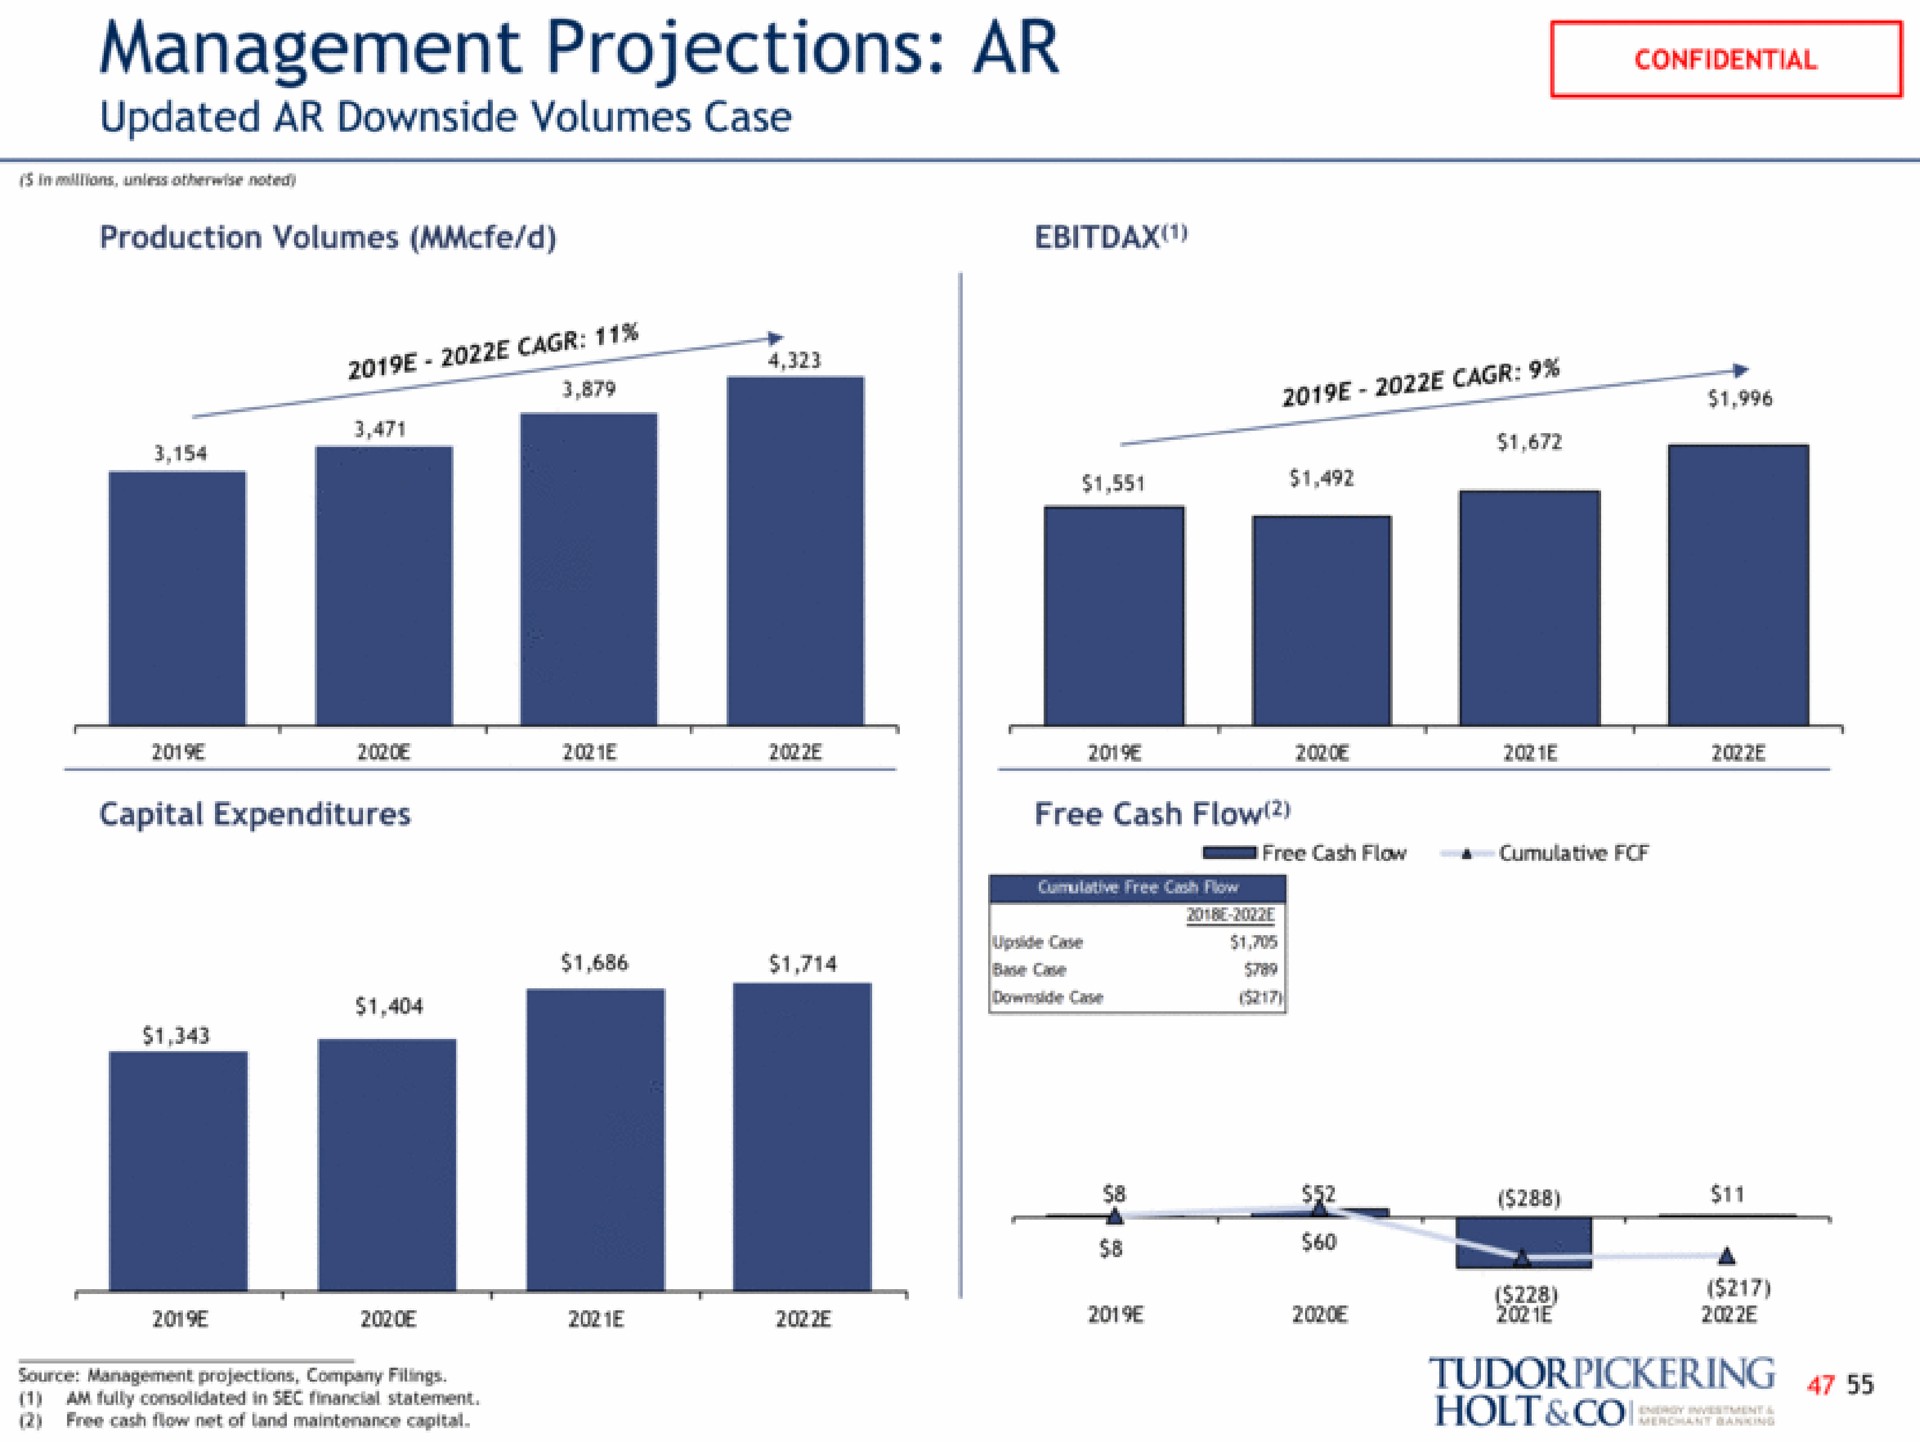 management projections updated downside volumes case holt | Tudor, Pickering, Holt & Co